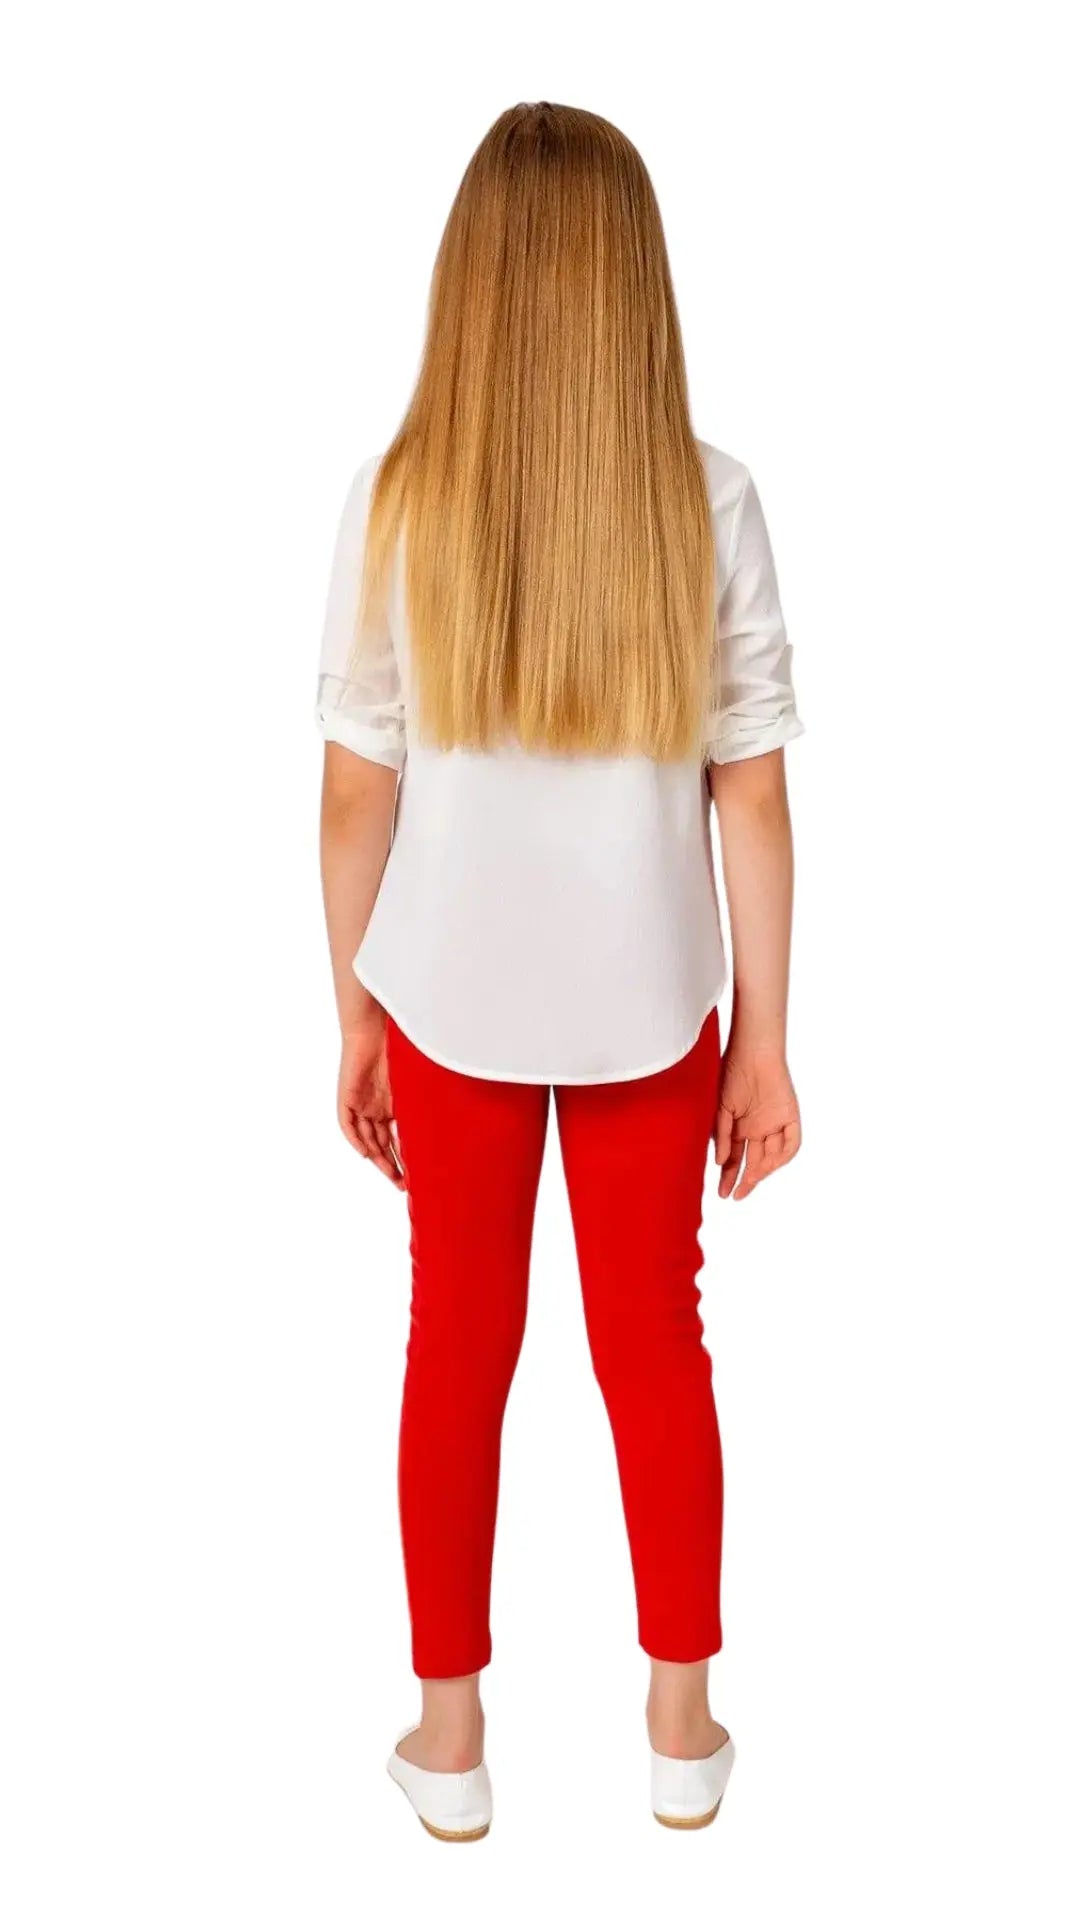 InCity Girls Tween 7-14 Years Regular Fit Red Casual Long Sleeve Comfy Malta Fashion Blouse InCity Boys & Girls